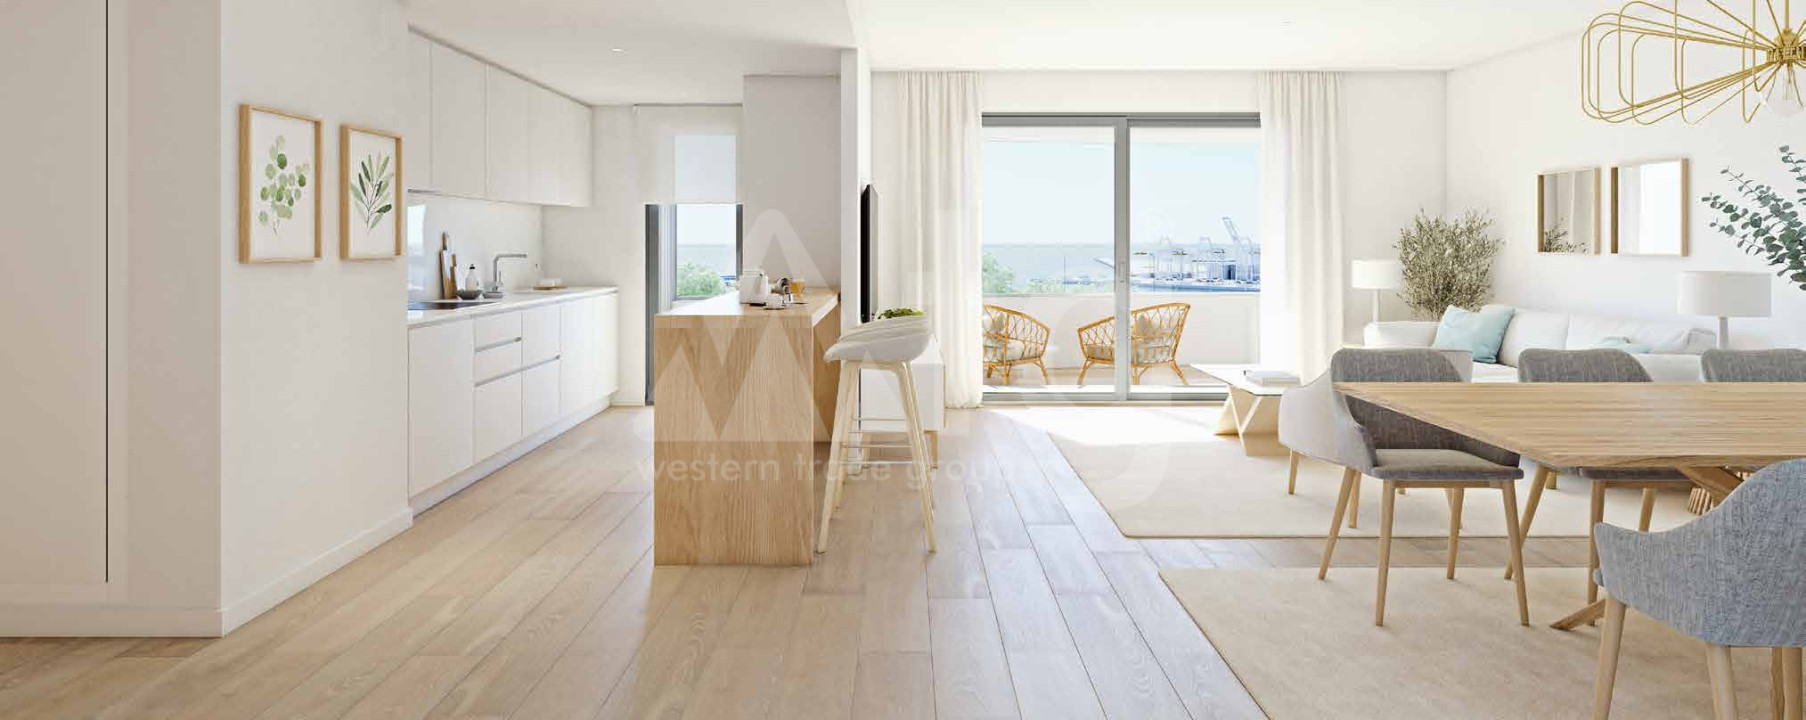 4 bedroom Apartment in Alicante - AEH25891 - 3